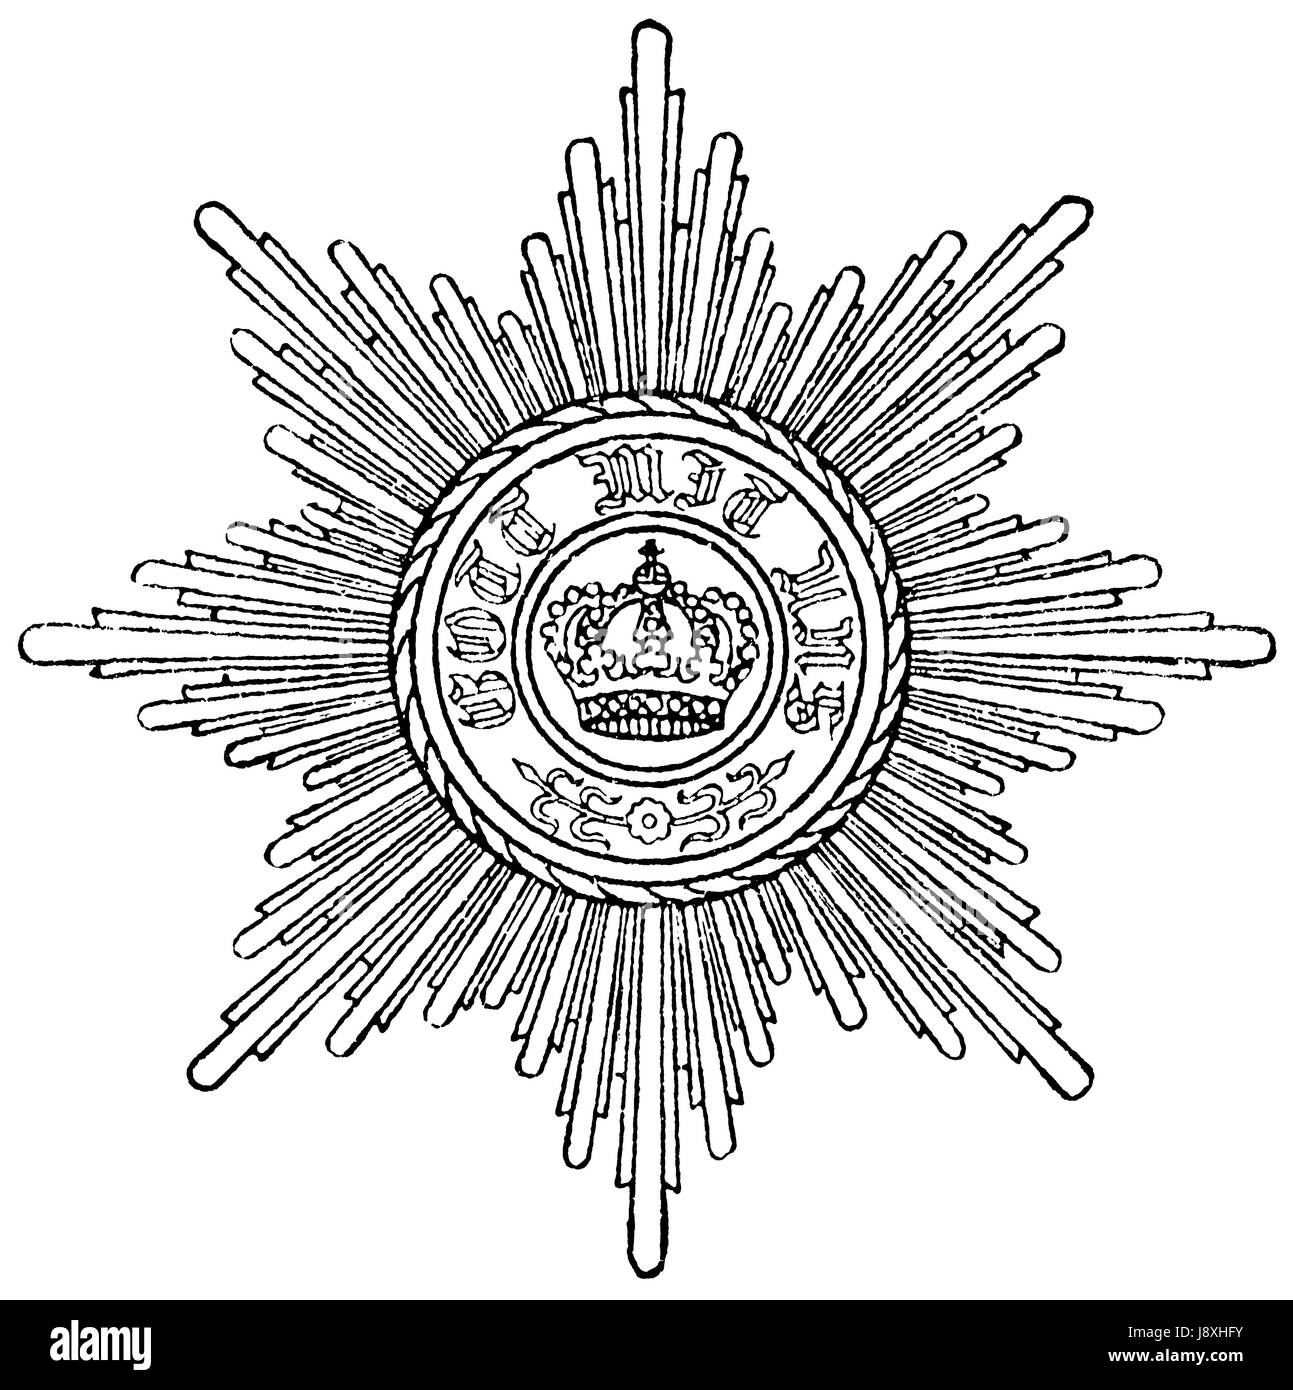 prussian, prussia, merit, kingdom, crown, star, order, emblem, black, swarthy, Stock Photo